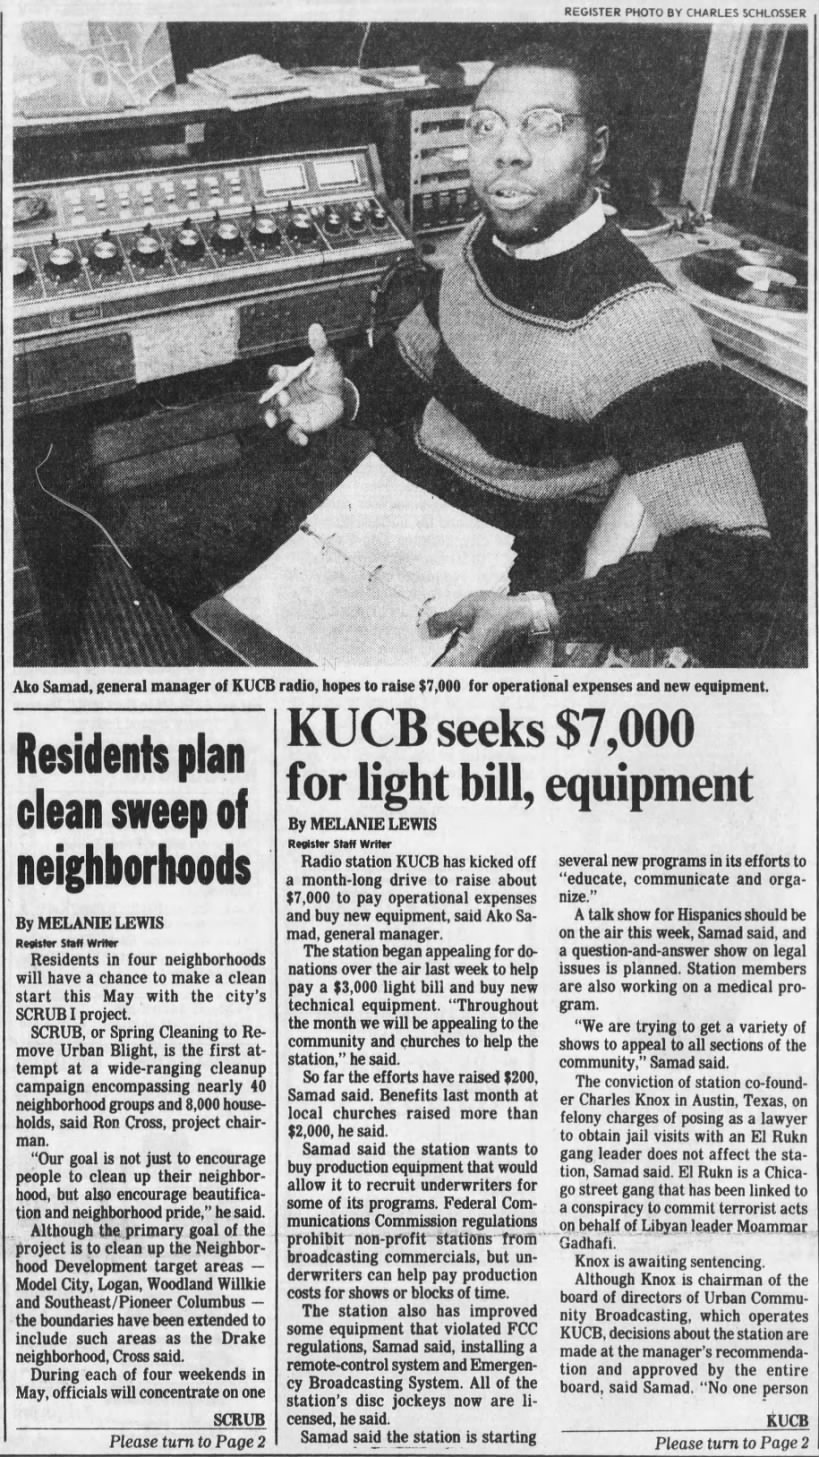 KUCB seeks $7,000 for light bill, equipment